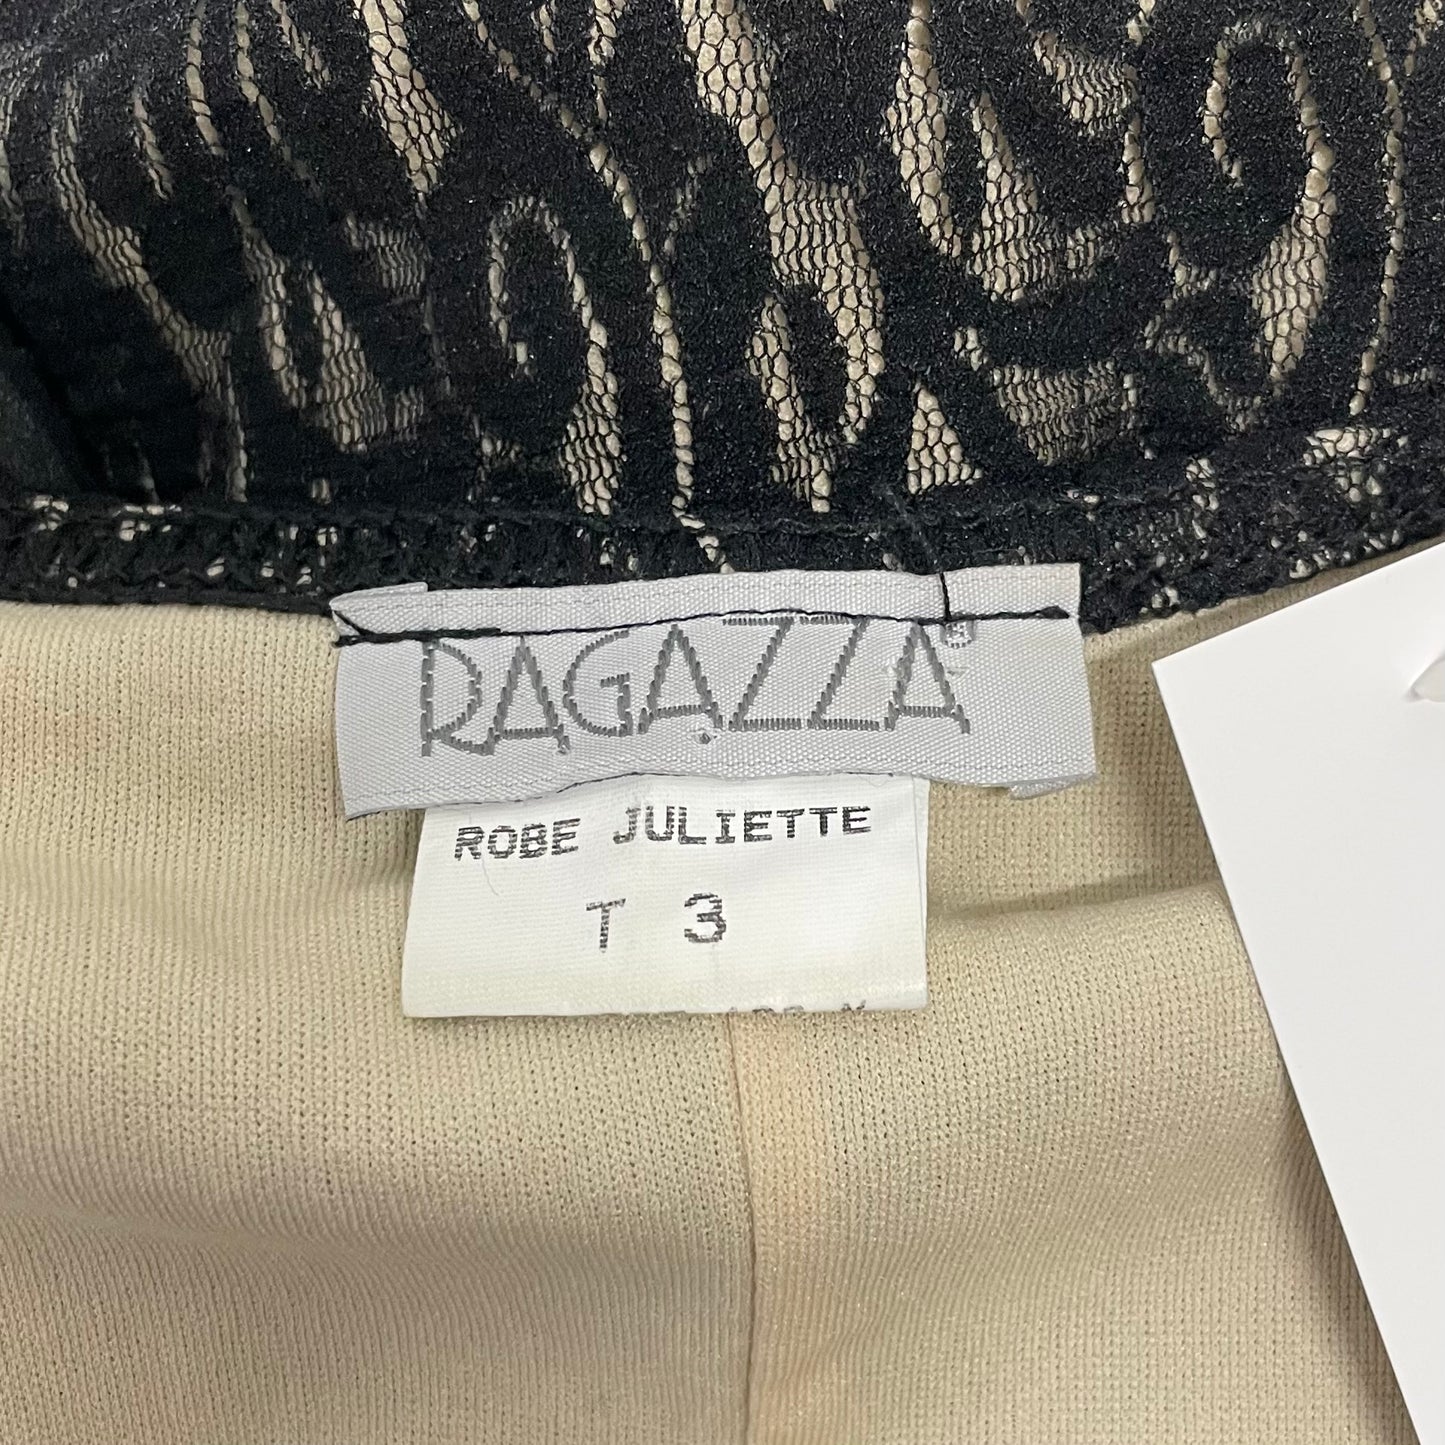 90's-00's "RAGAZZA" lace long cami one-piece